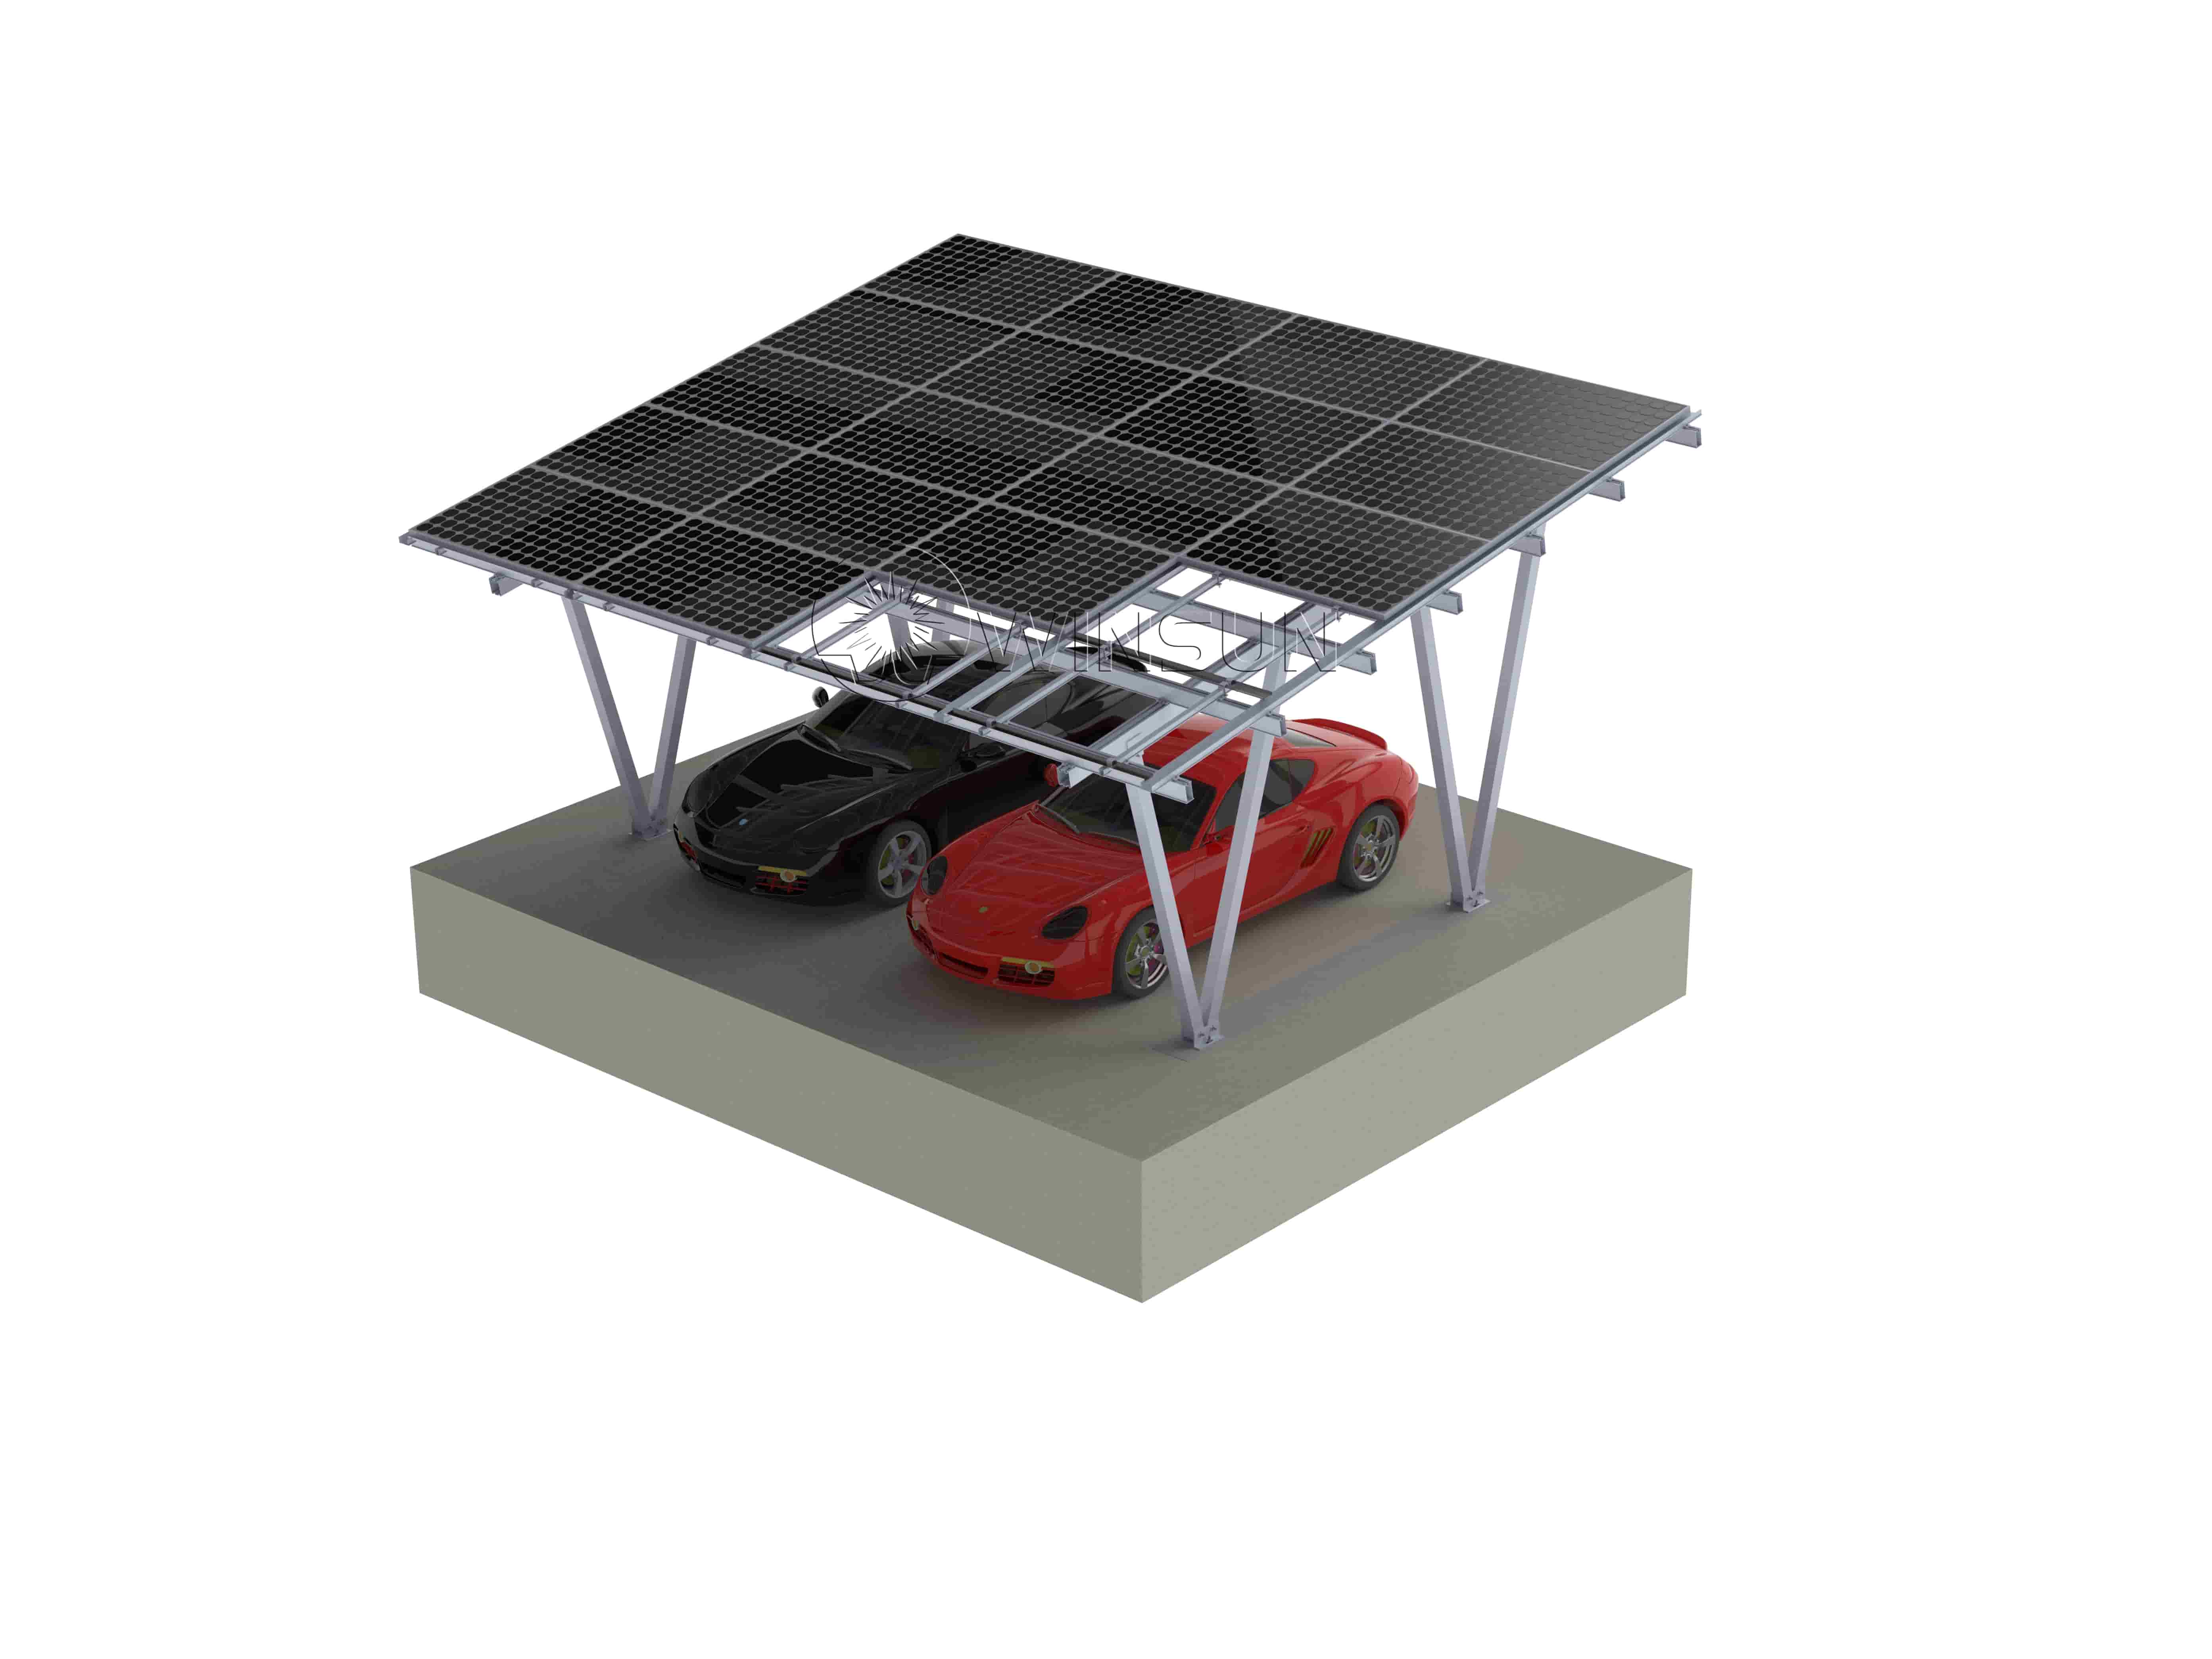 high strength solar carport